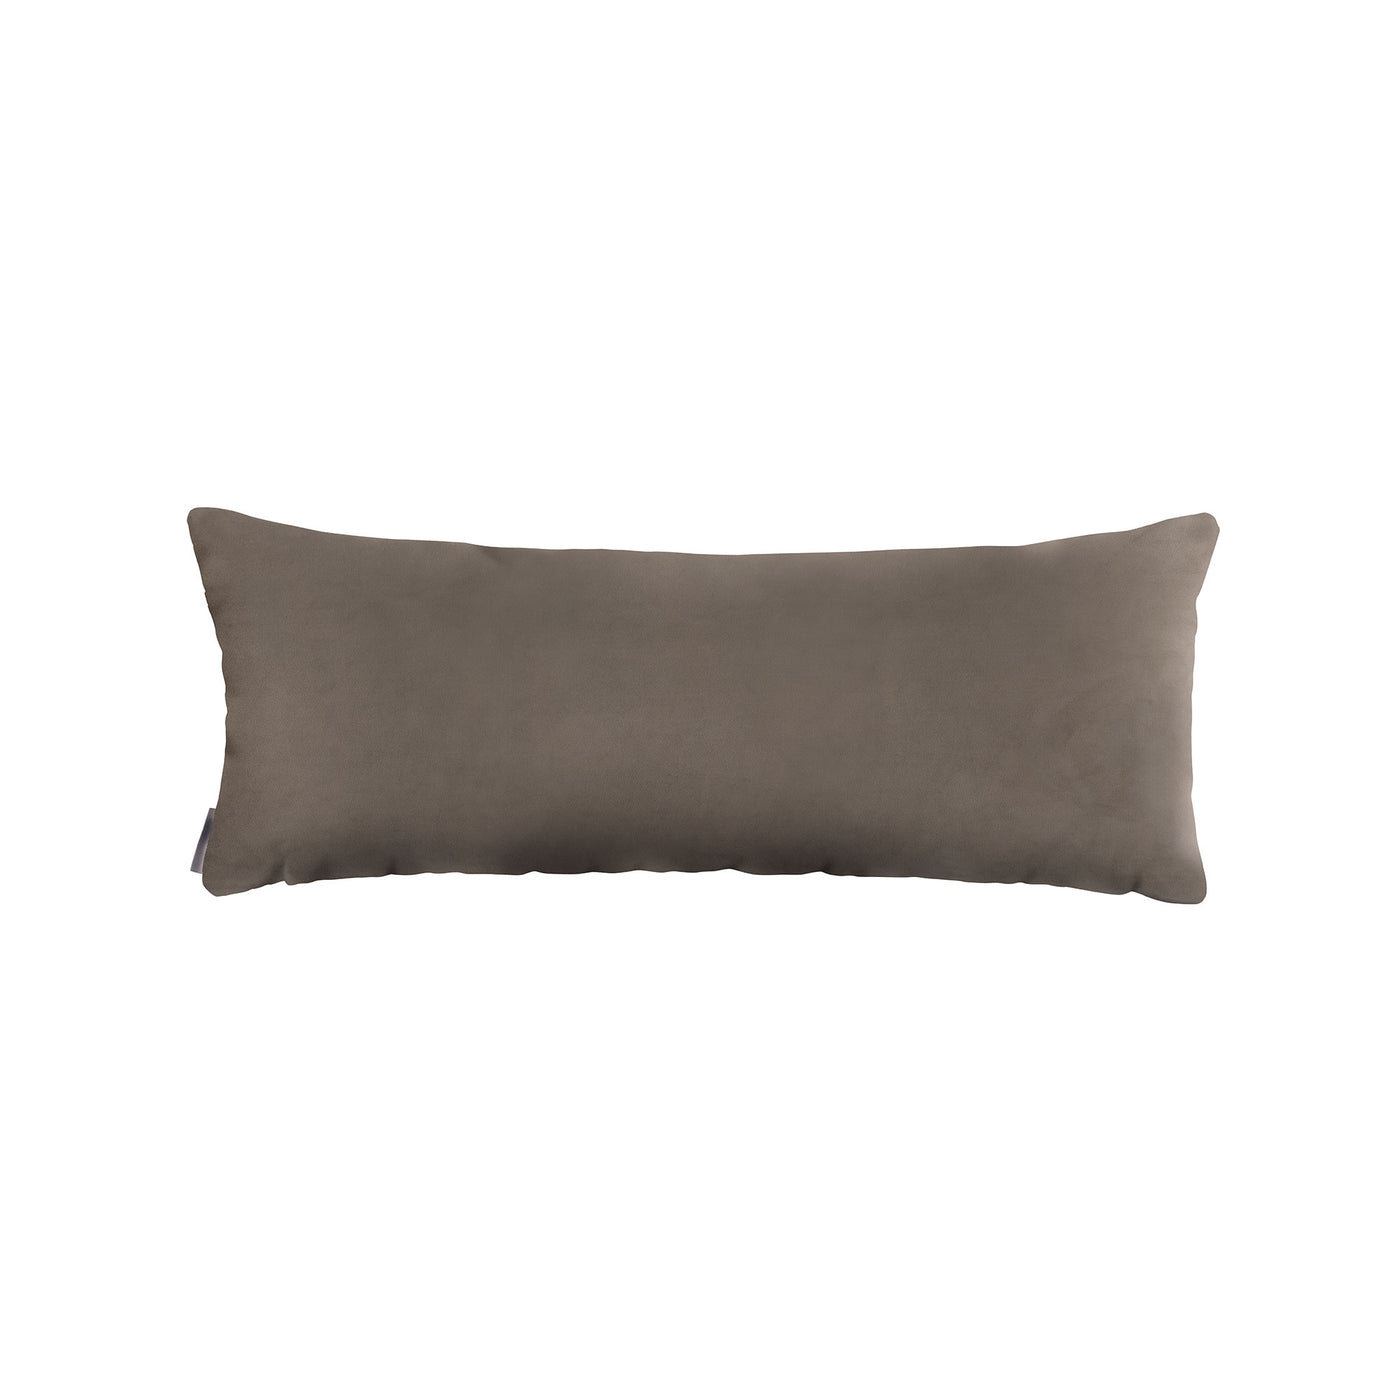 Vivid Ecru Long Rectangle Pillow (18x46)